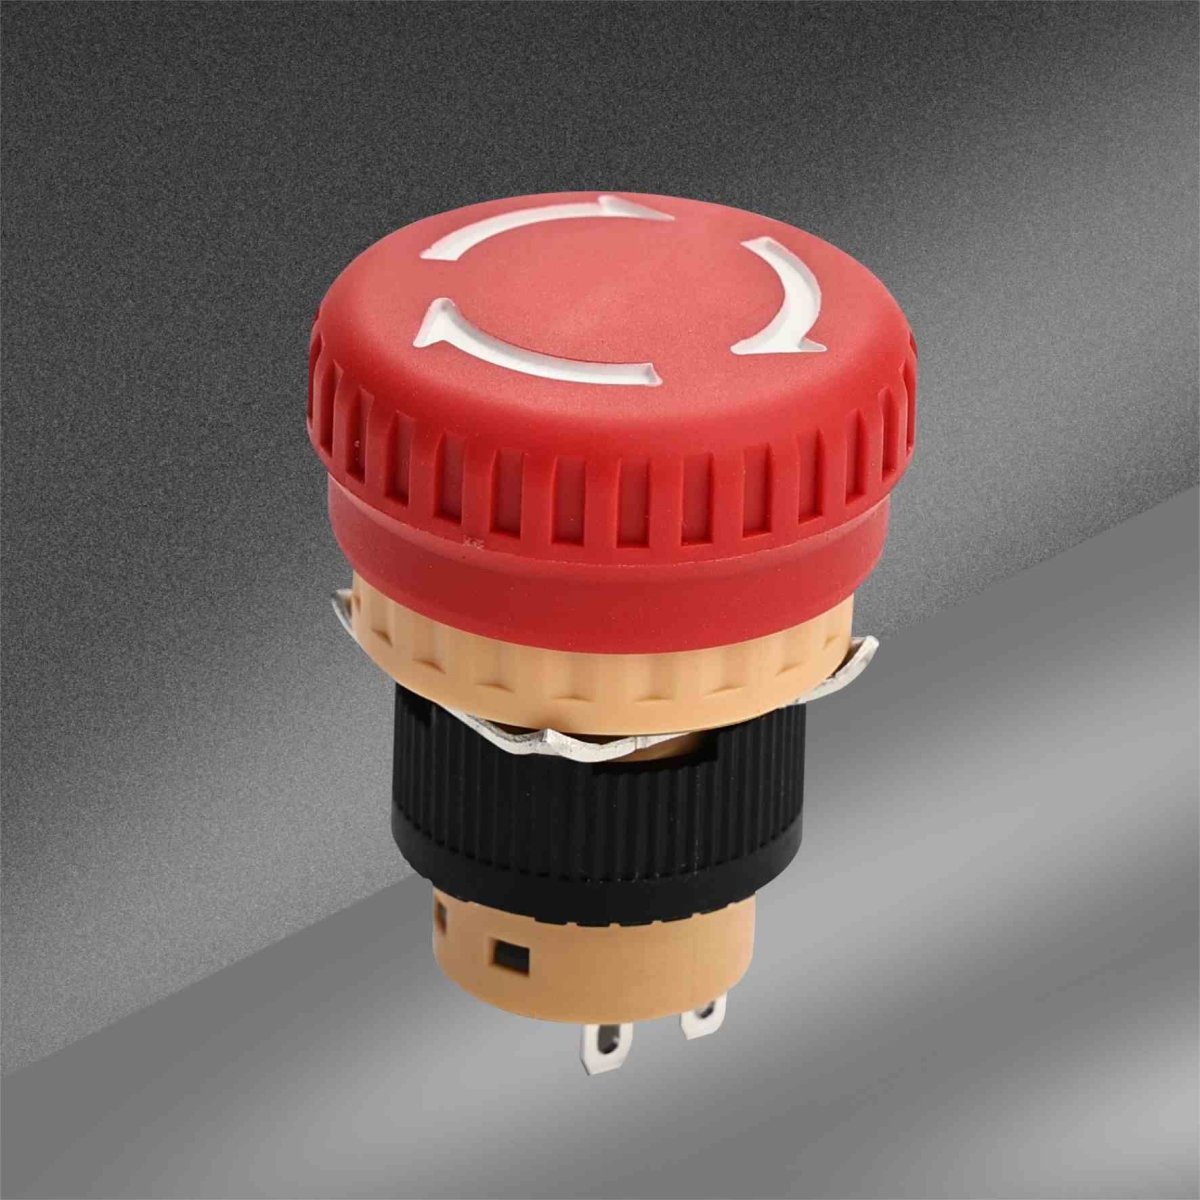 16mm Red Mushroom Emergency Stop Push Button Switch 250V 5 Amp LA16 Series - Type B-